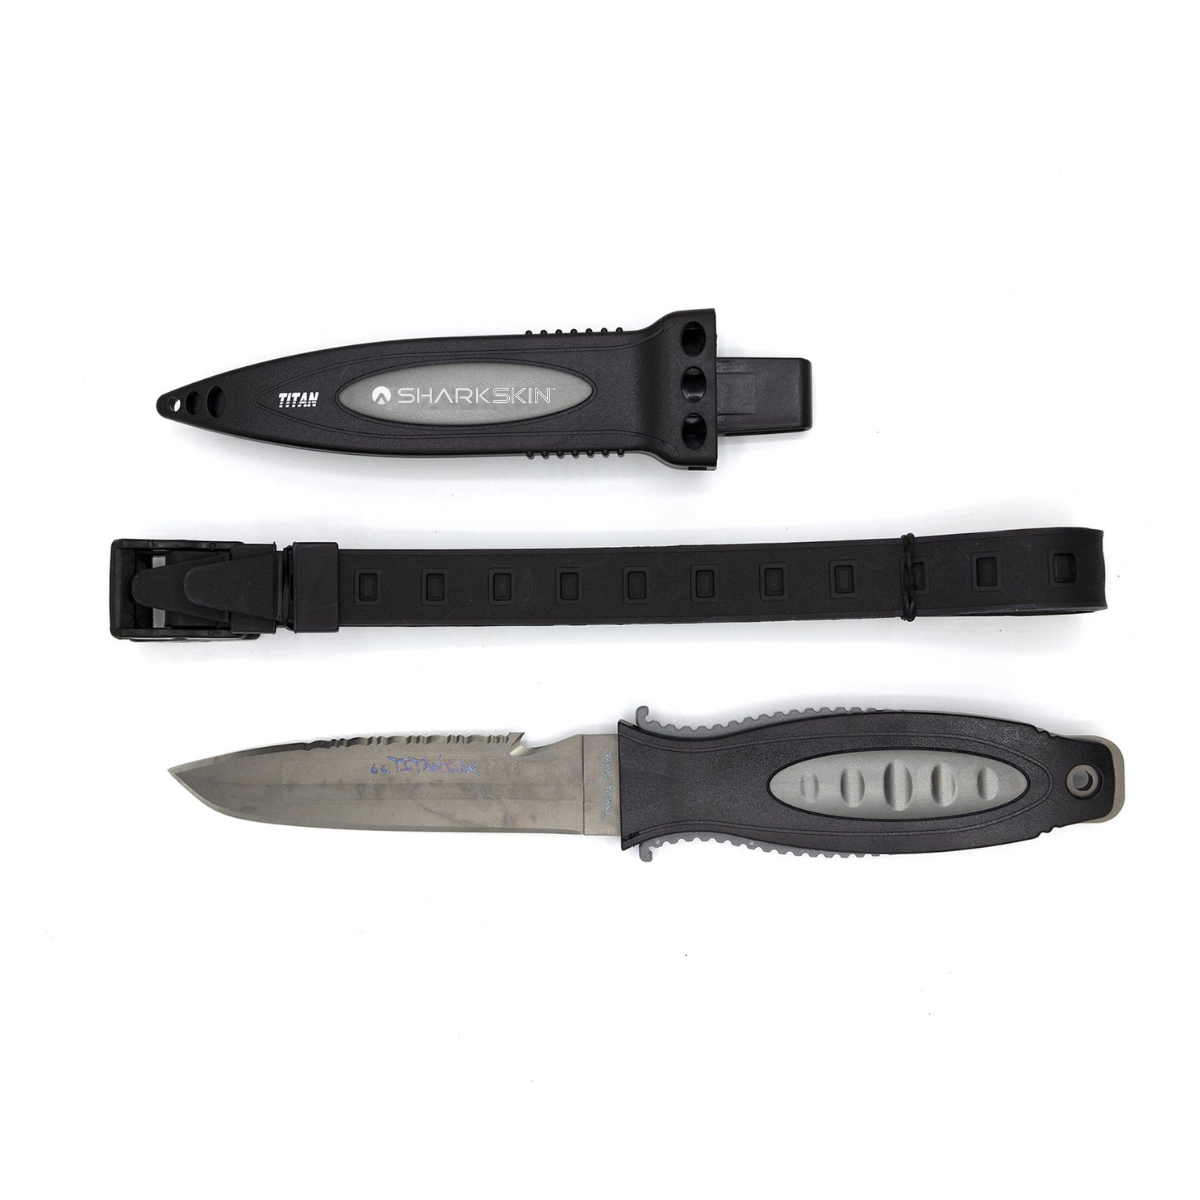 Sharkskin Titanium Knife Large With Press Quick Release Lock Sheath & Leg Straps